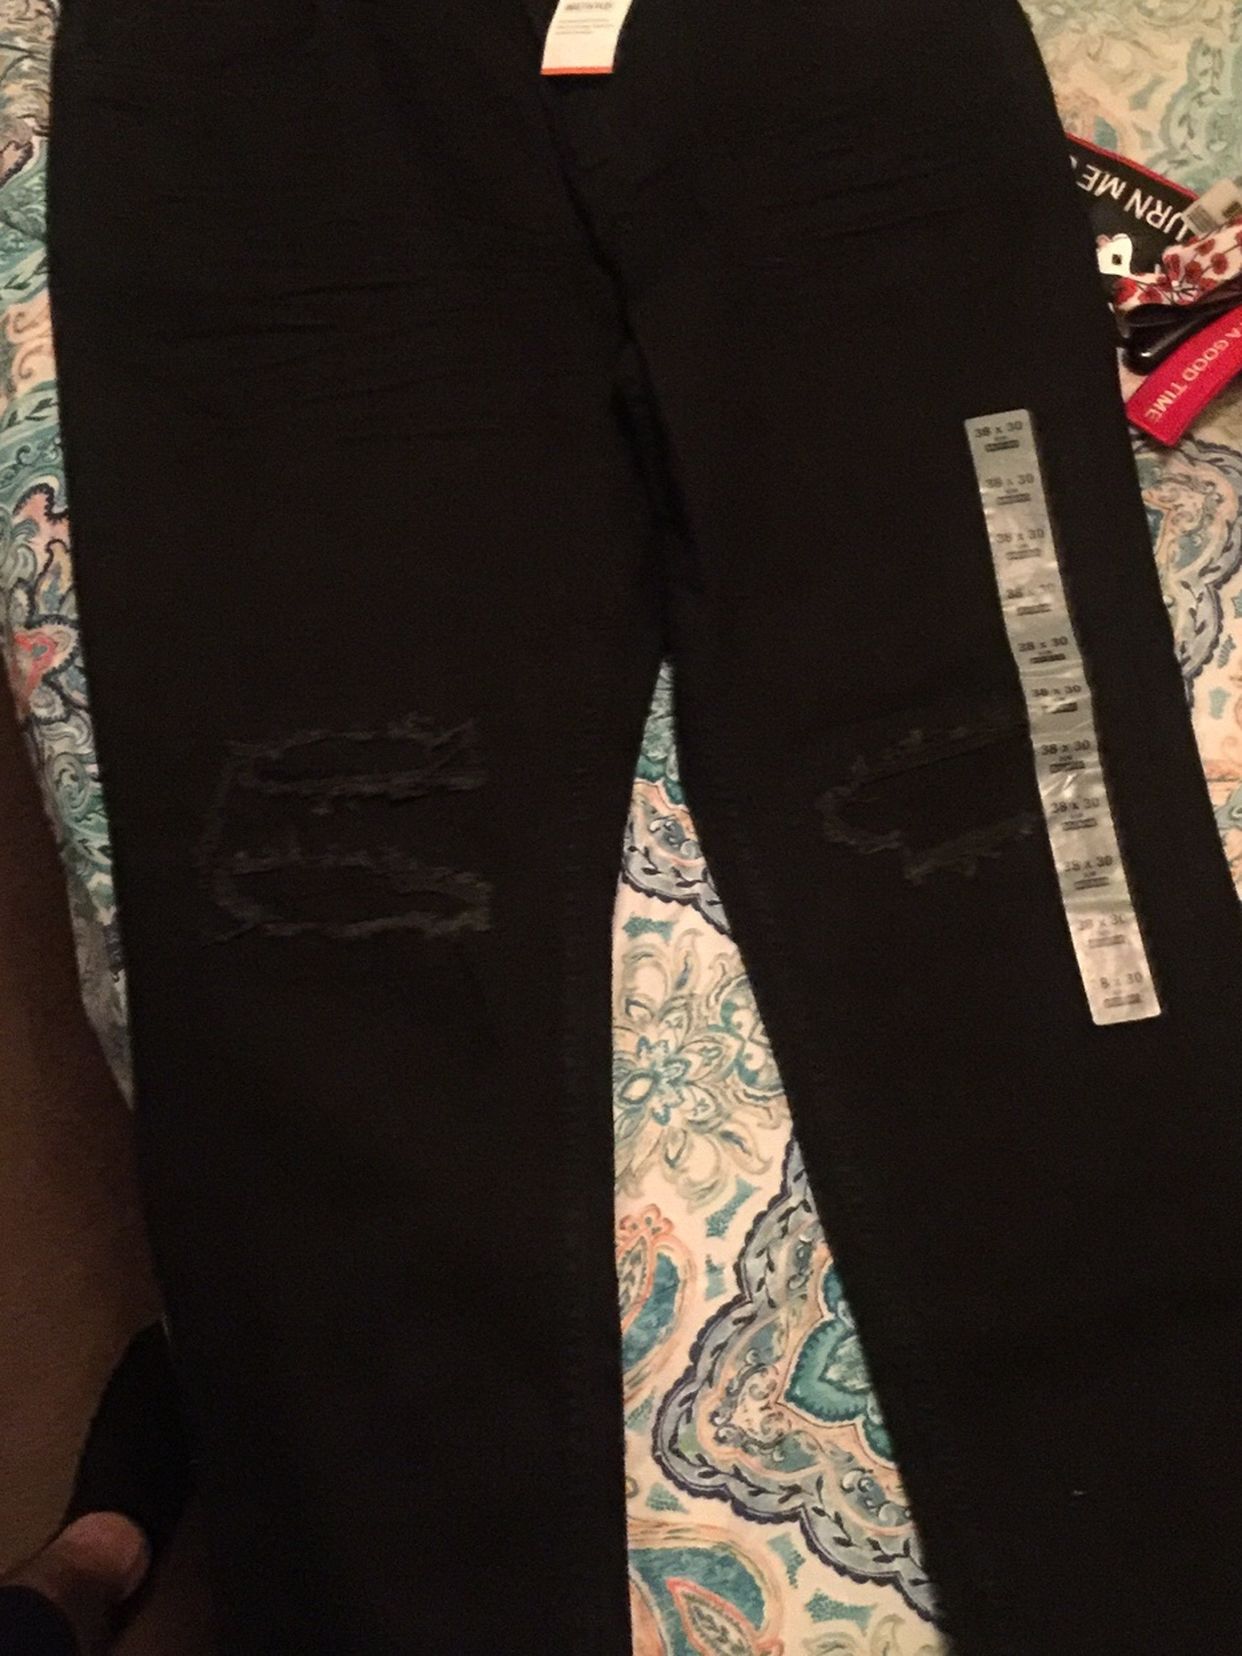 38x30 Black Old Navy Jeans